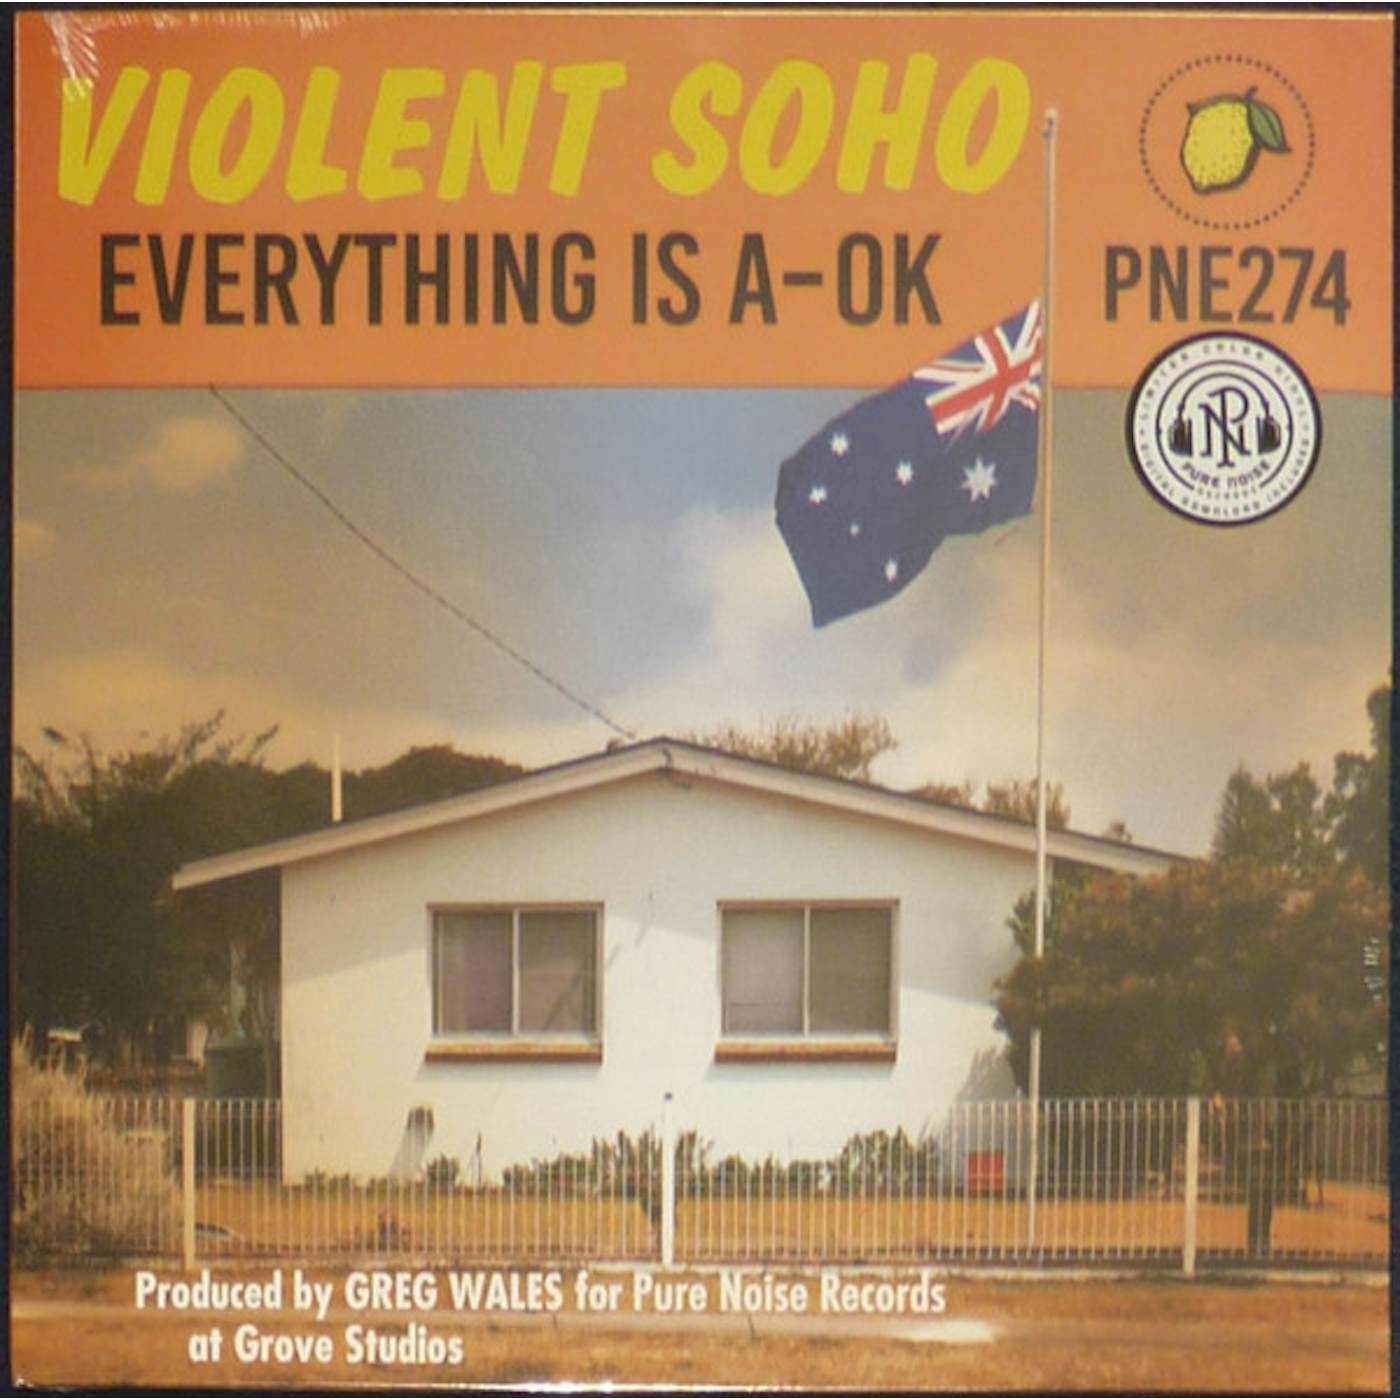 Violent Soho Everything Is A-OK Vinyl Record